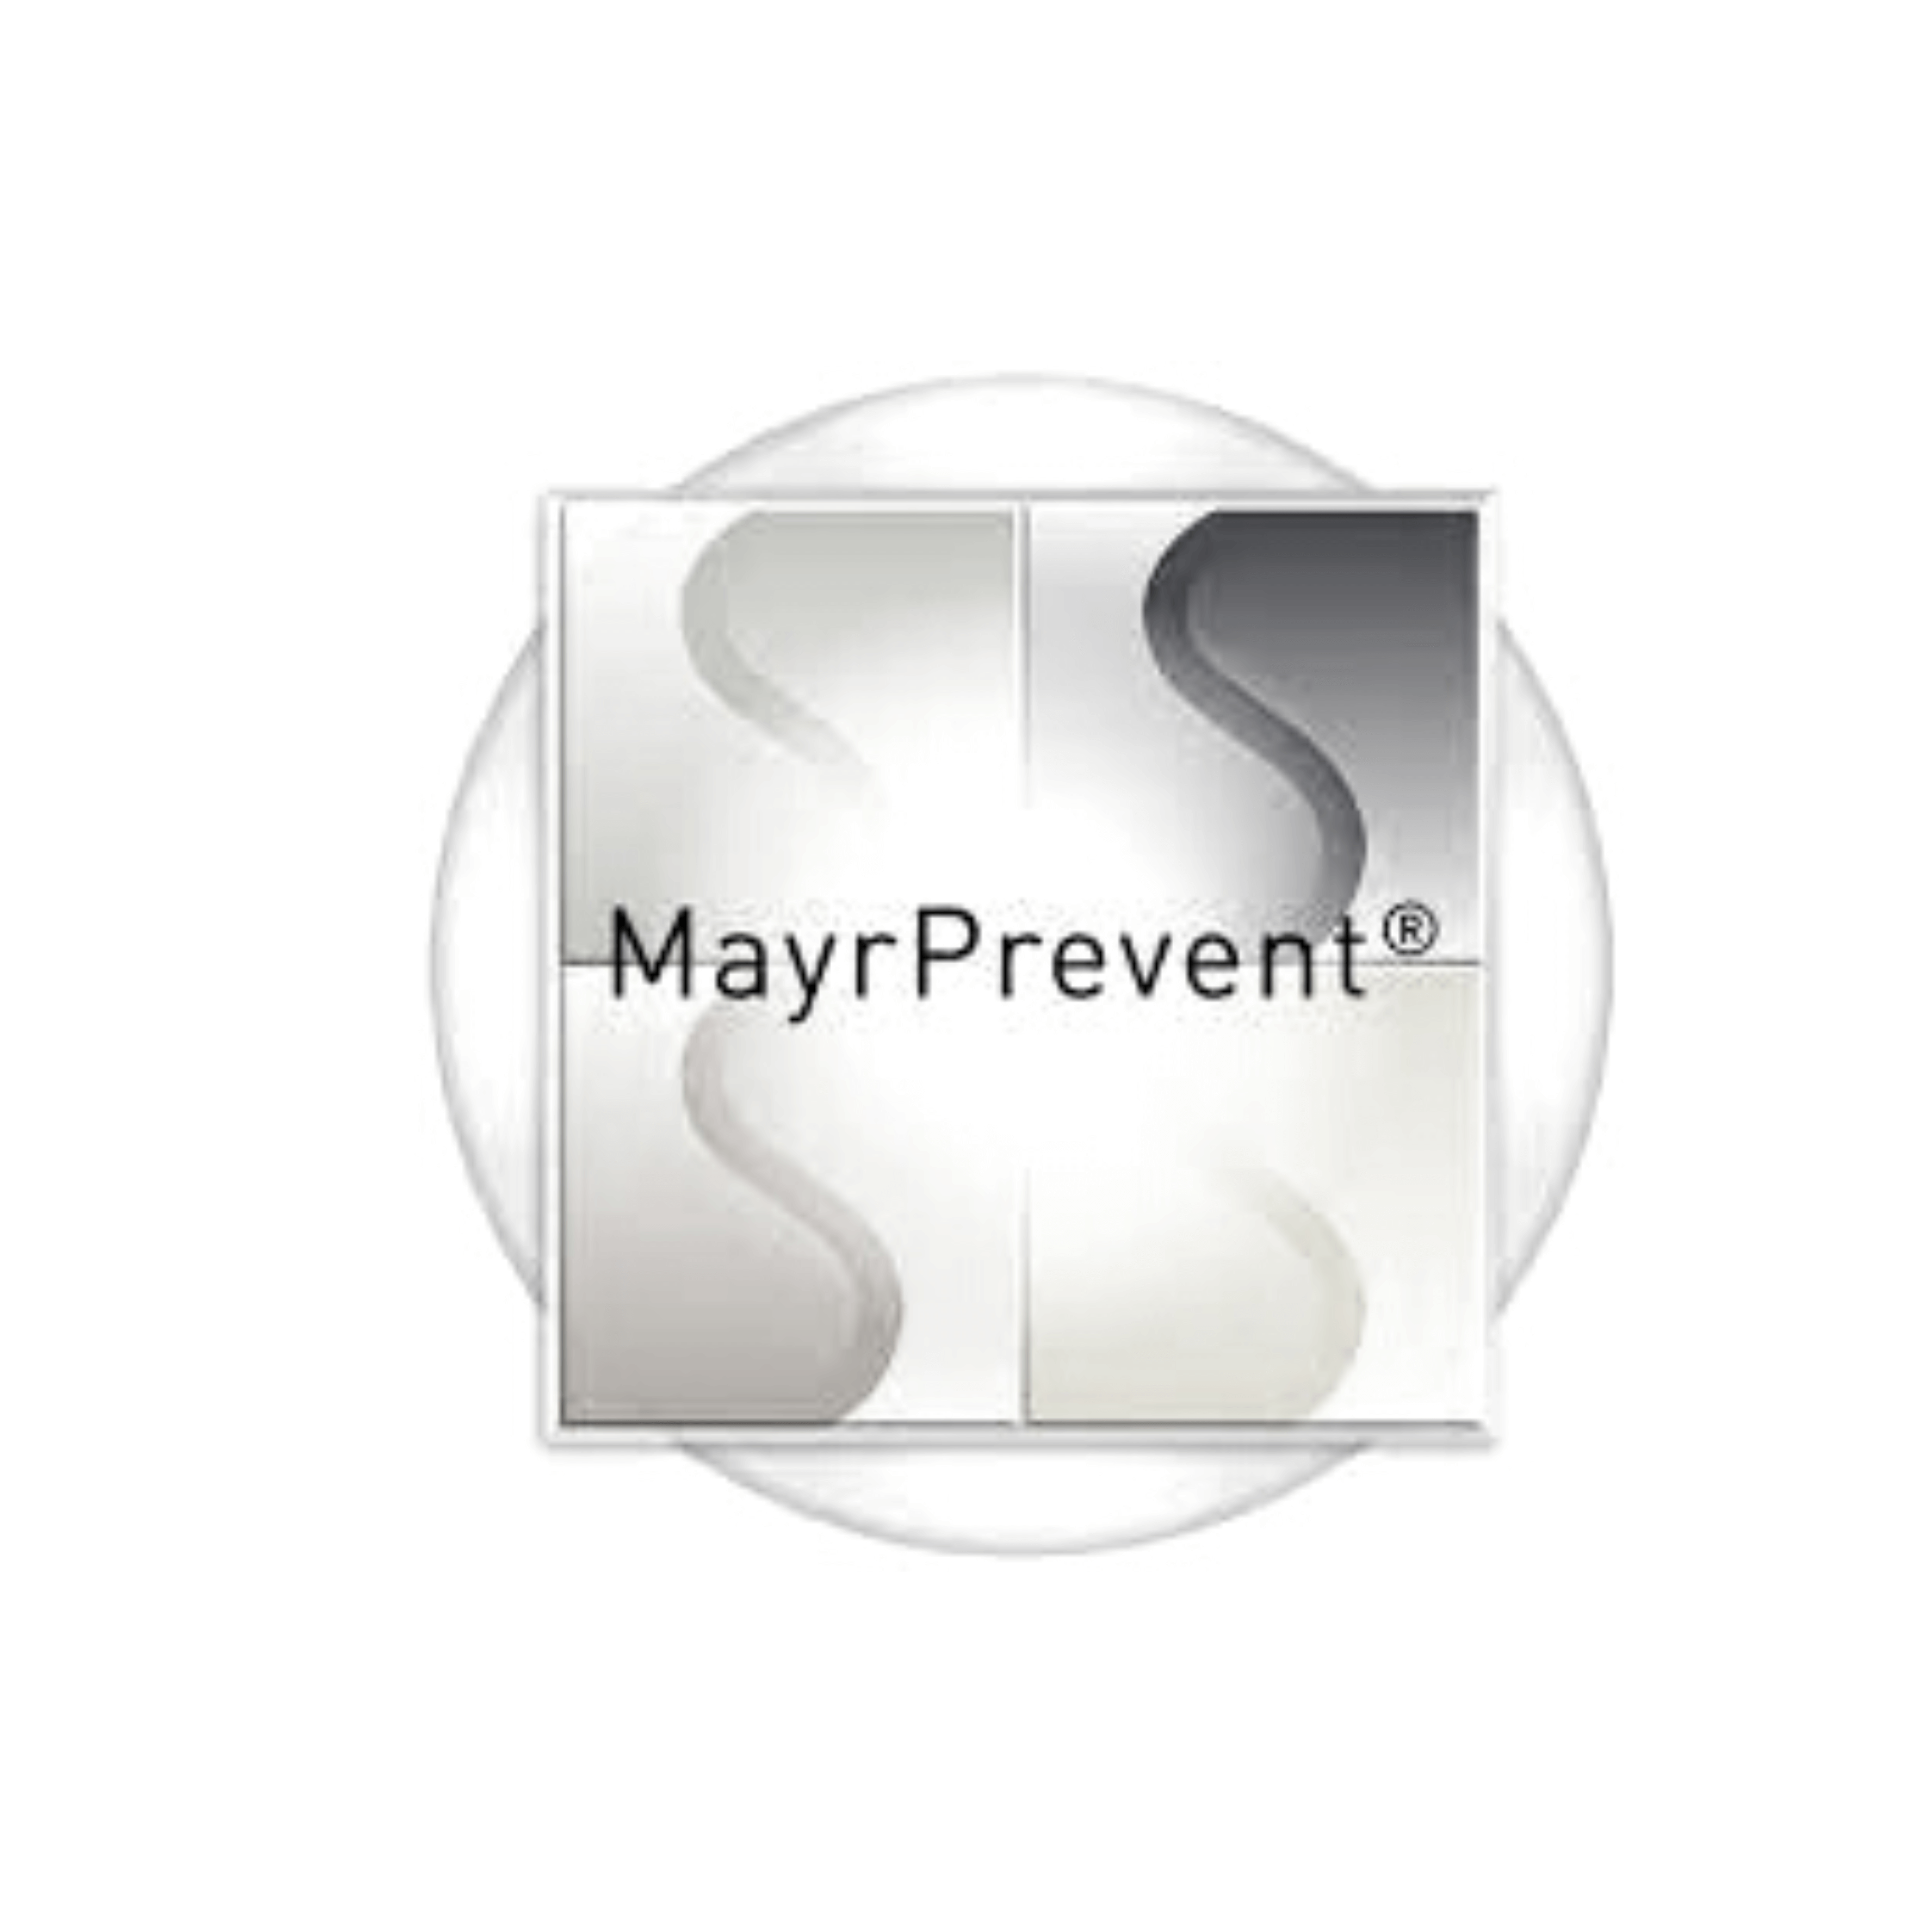 MAYR prevent